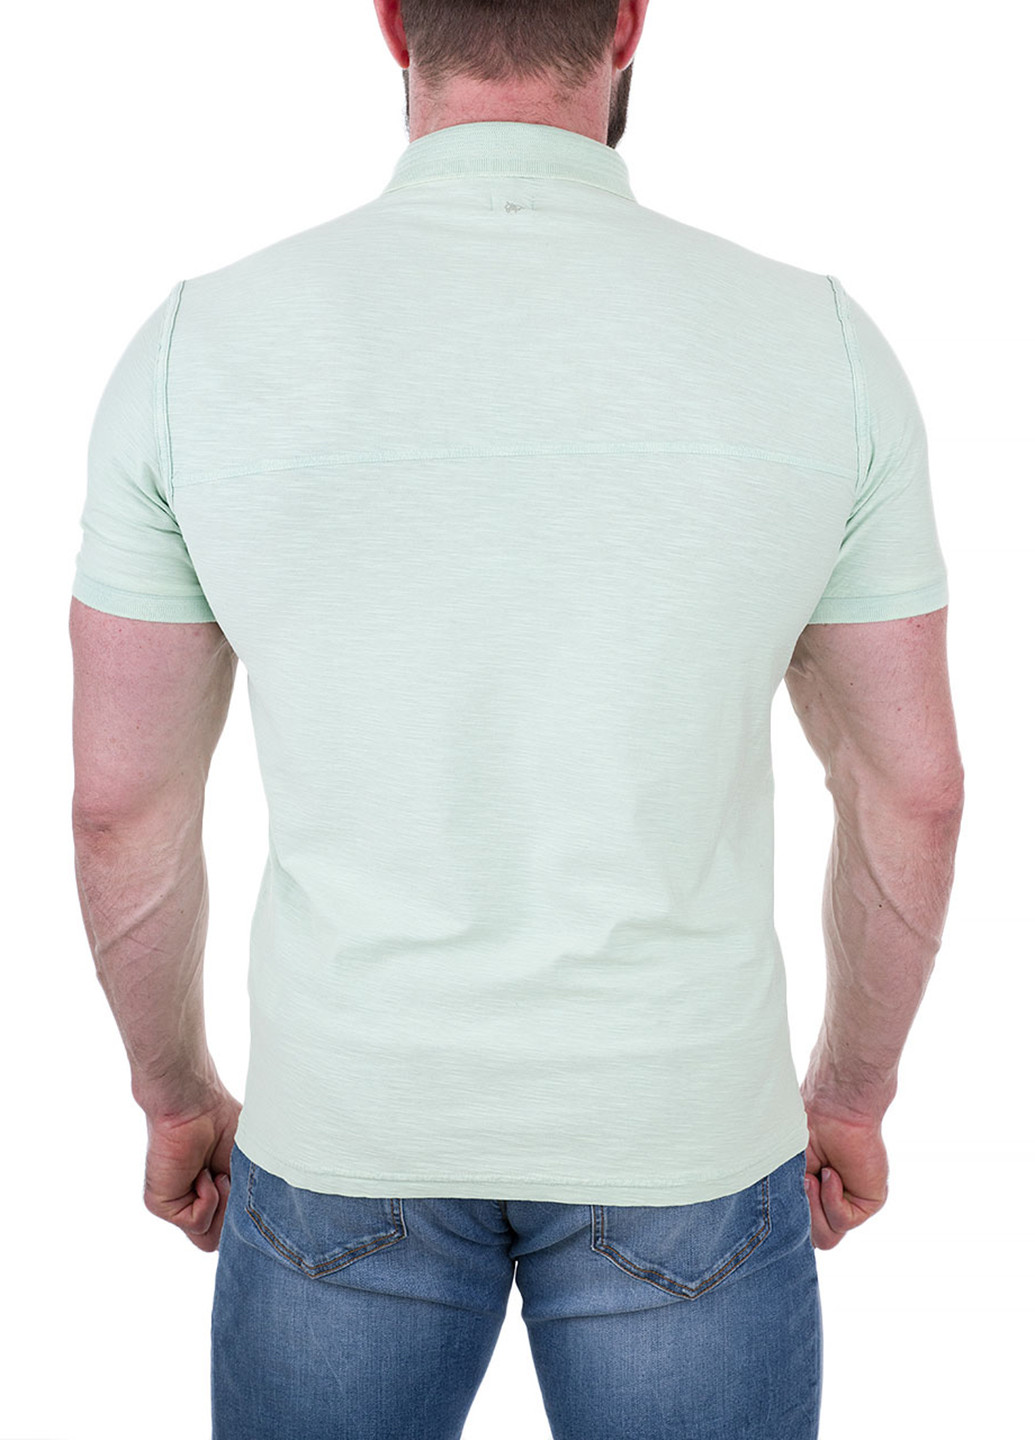 Салатовая футболка-поло для мужчин Roy Robson однотонная